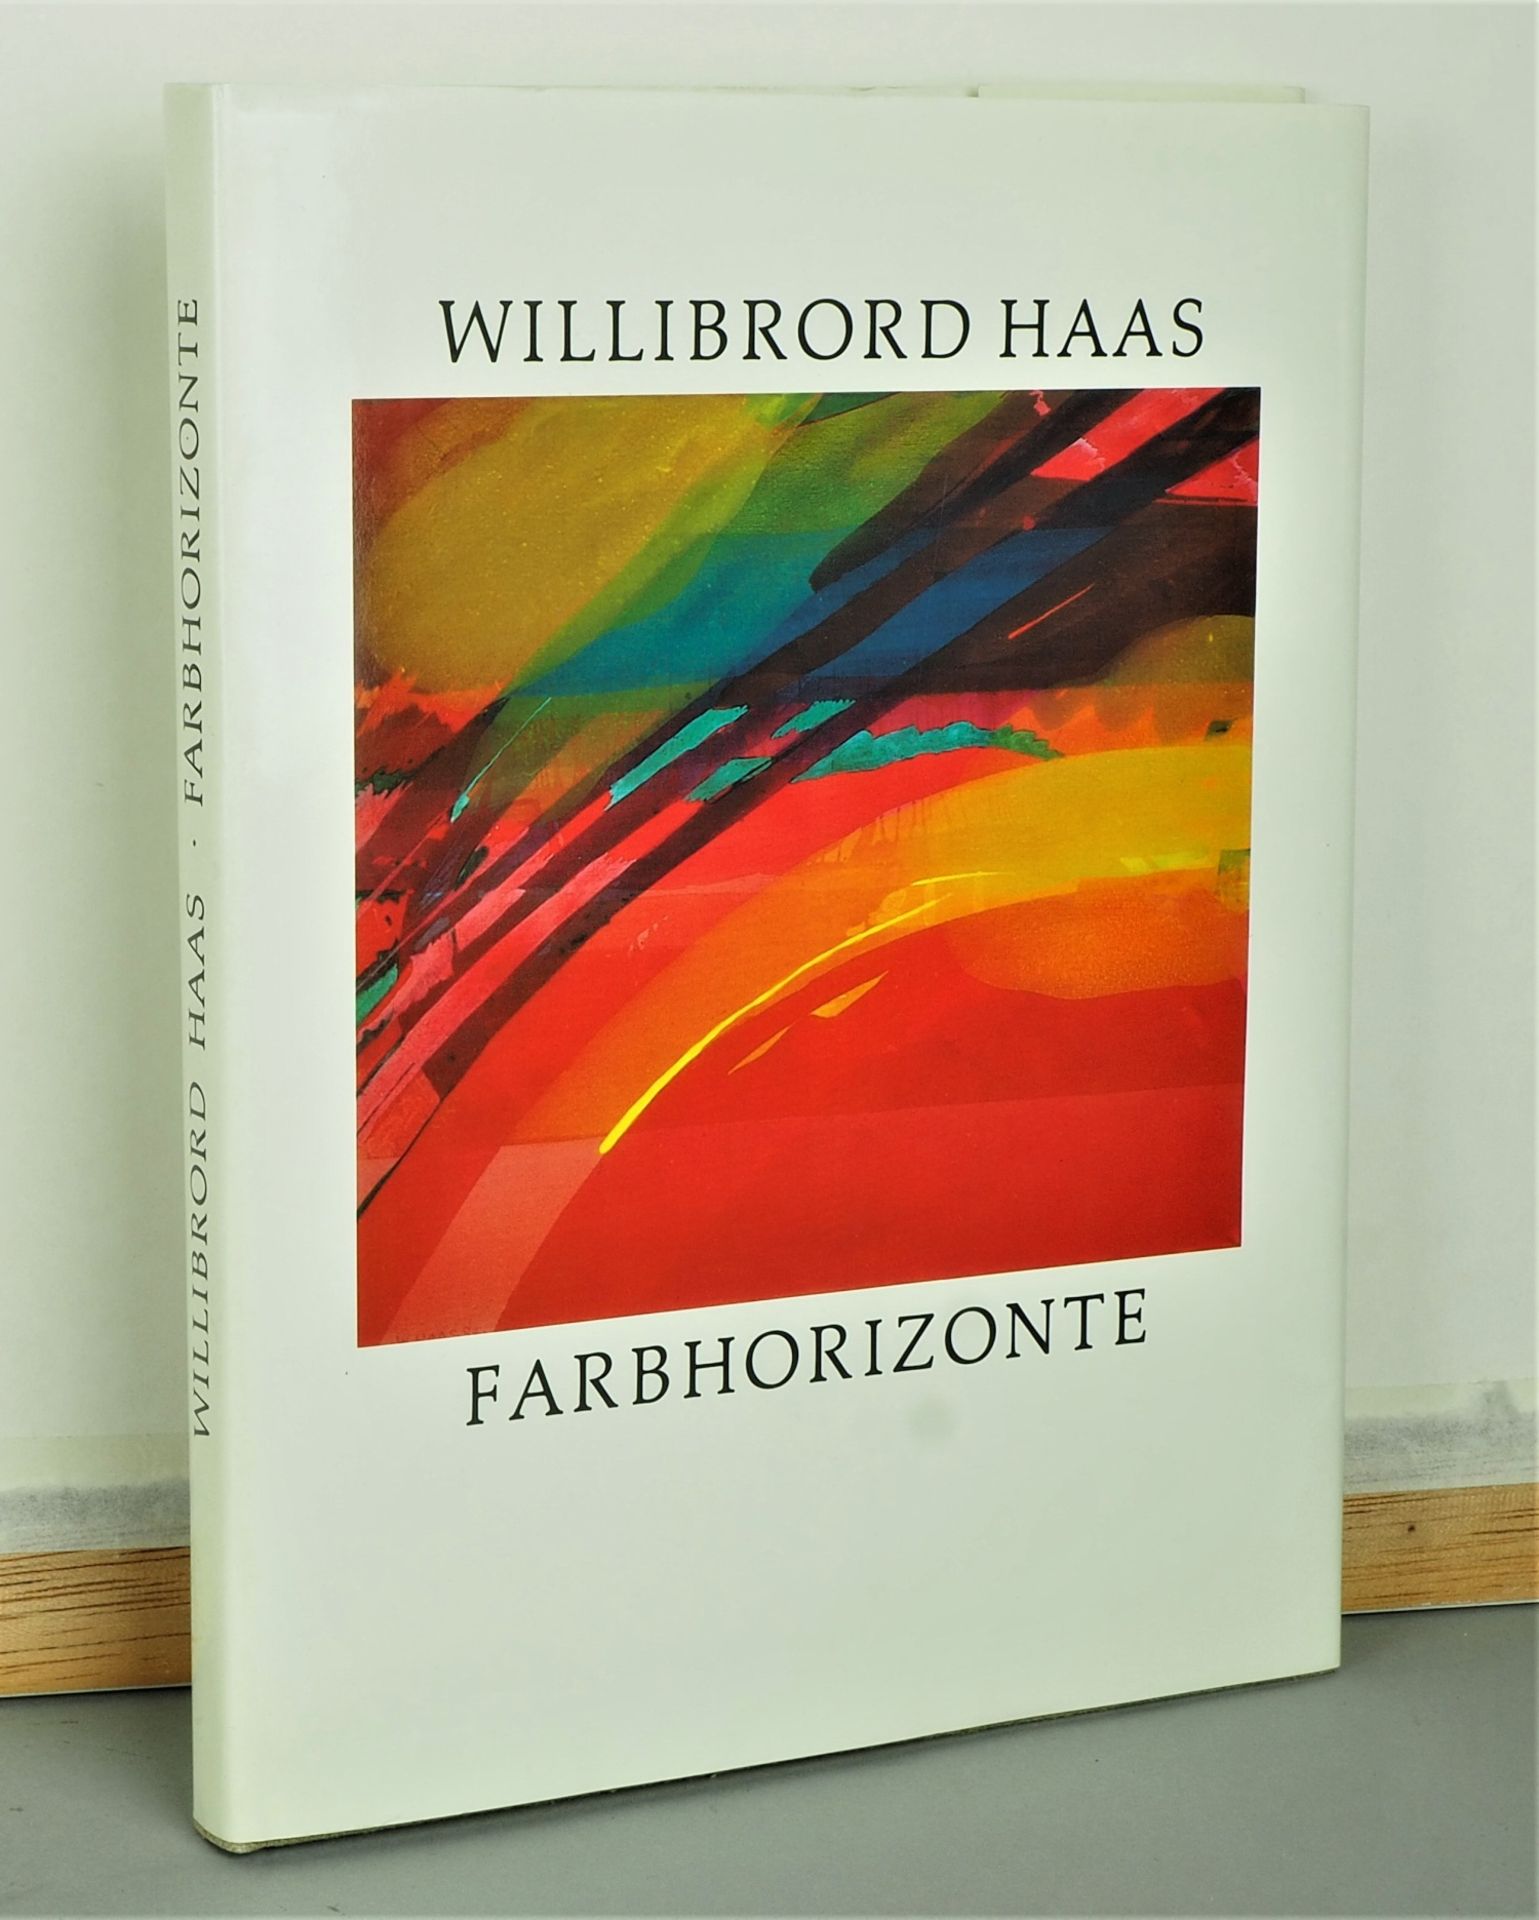 Willibrord Haas (b. 1936), Luminous column, 1987. - Image 4 of 4